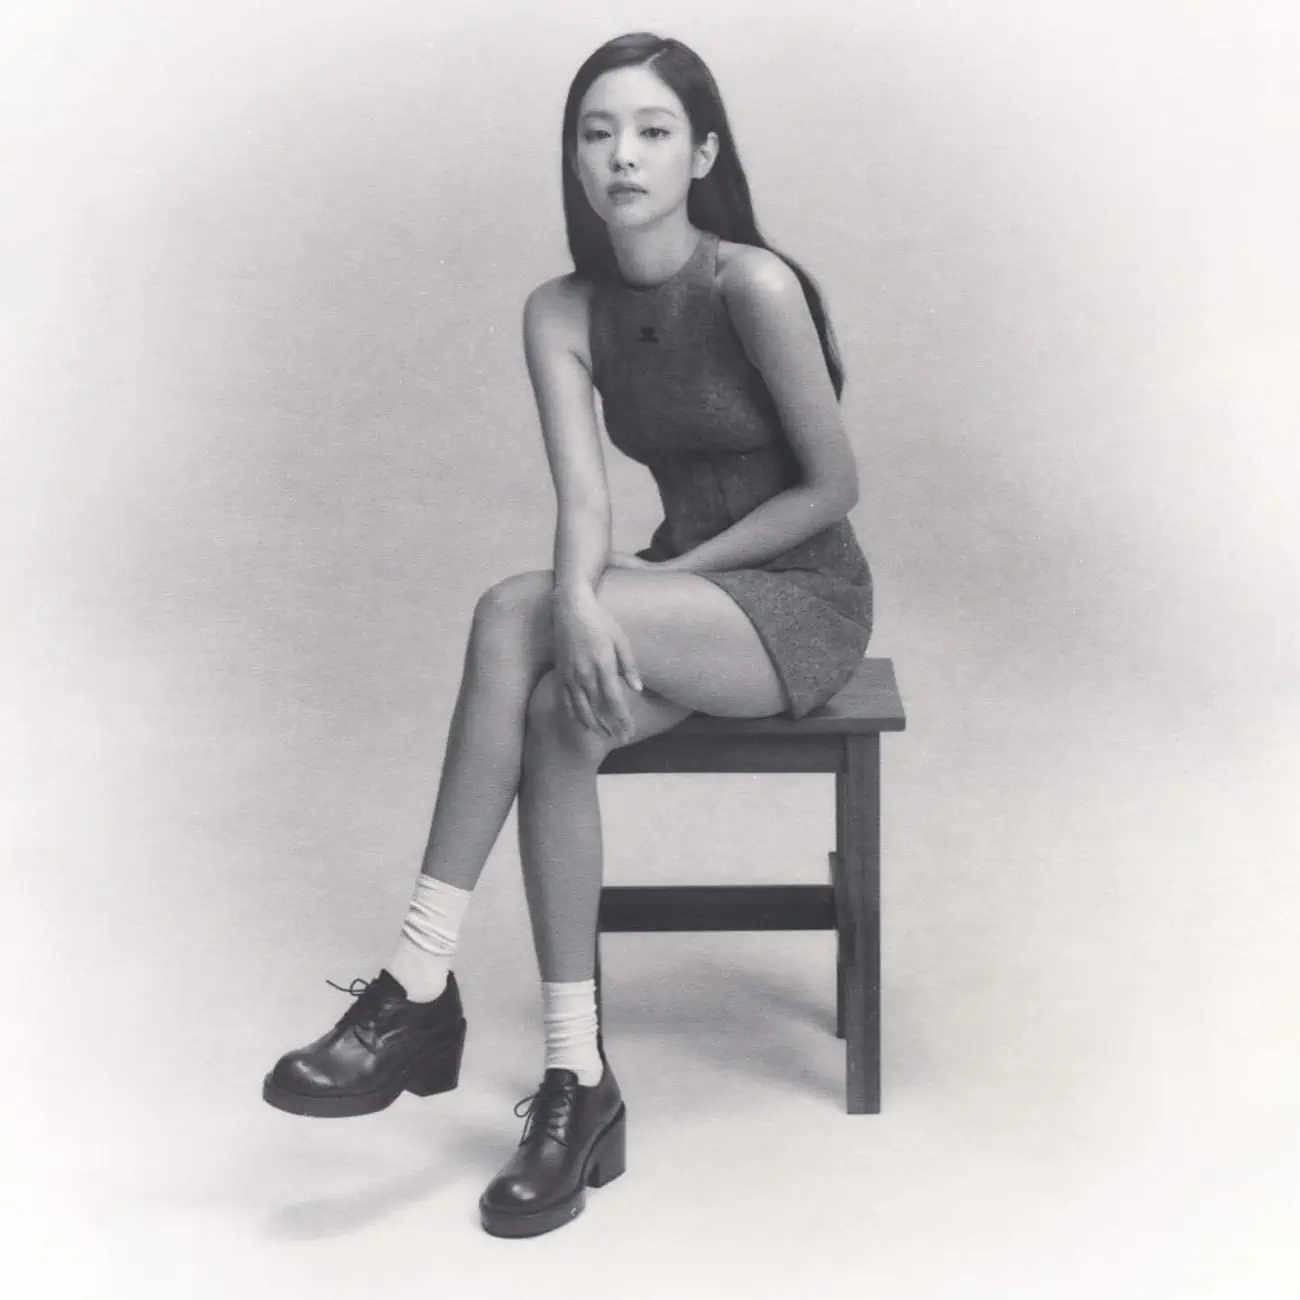 Blackpink's Jennie debuts her fashion label ODD Atelier